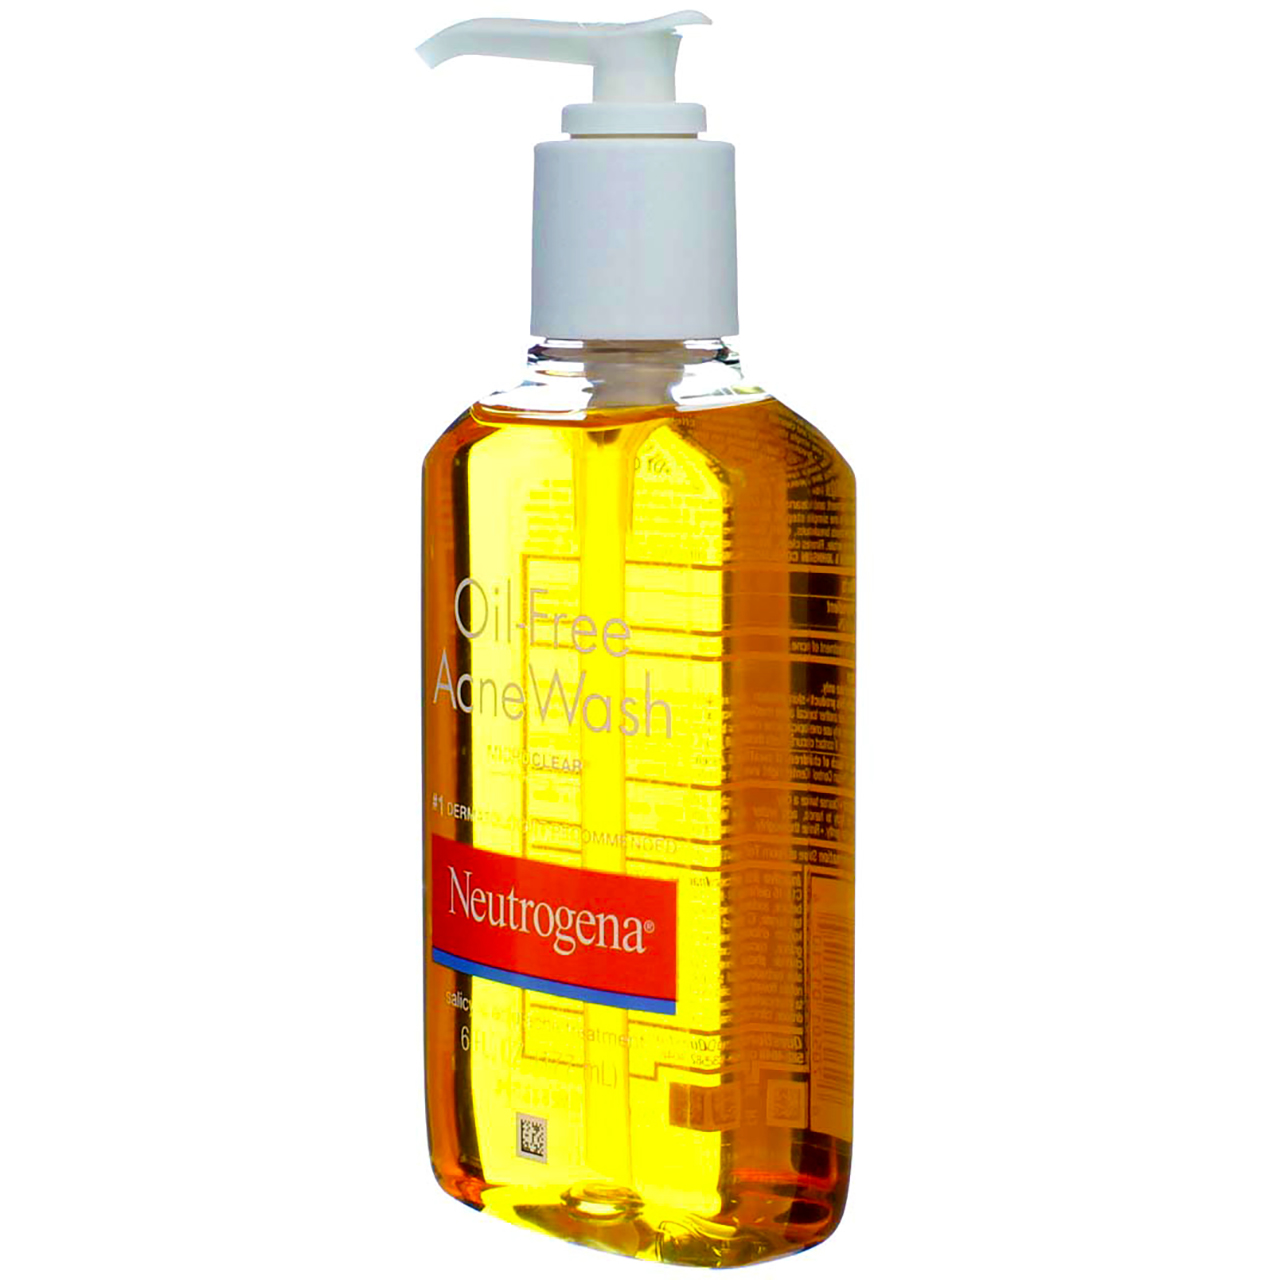 Neutrogena Oil-Free Acne Wash, 6 fl oz (3 Pack) (Bundle) - image 2 of 5